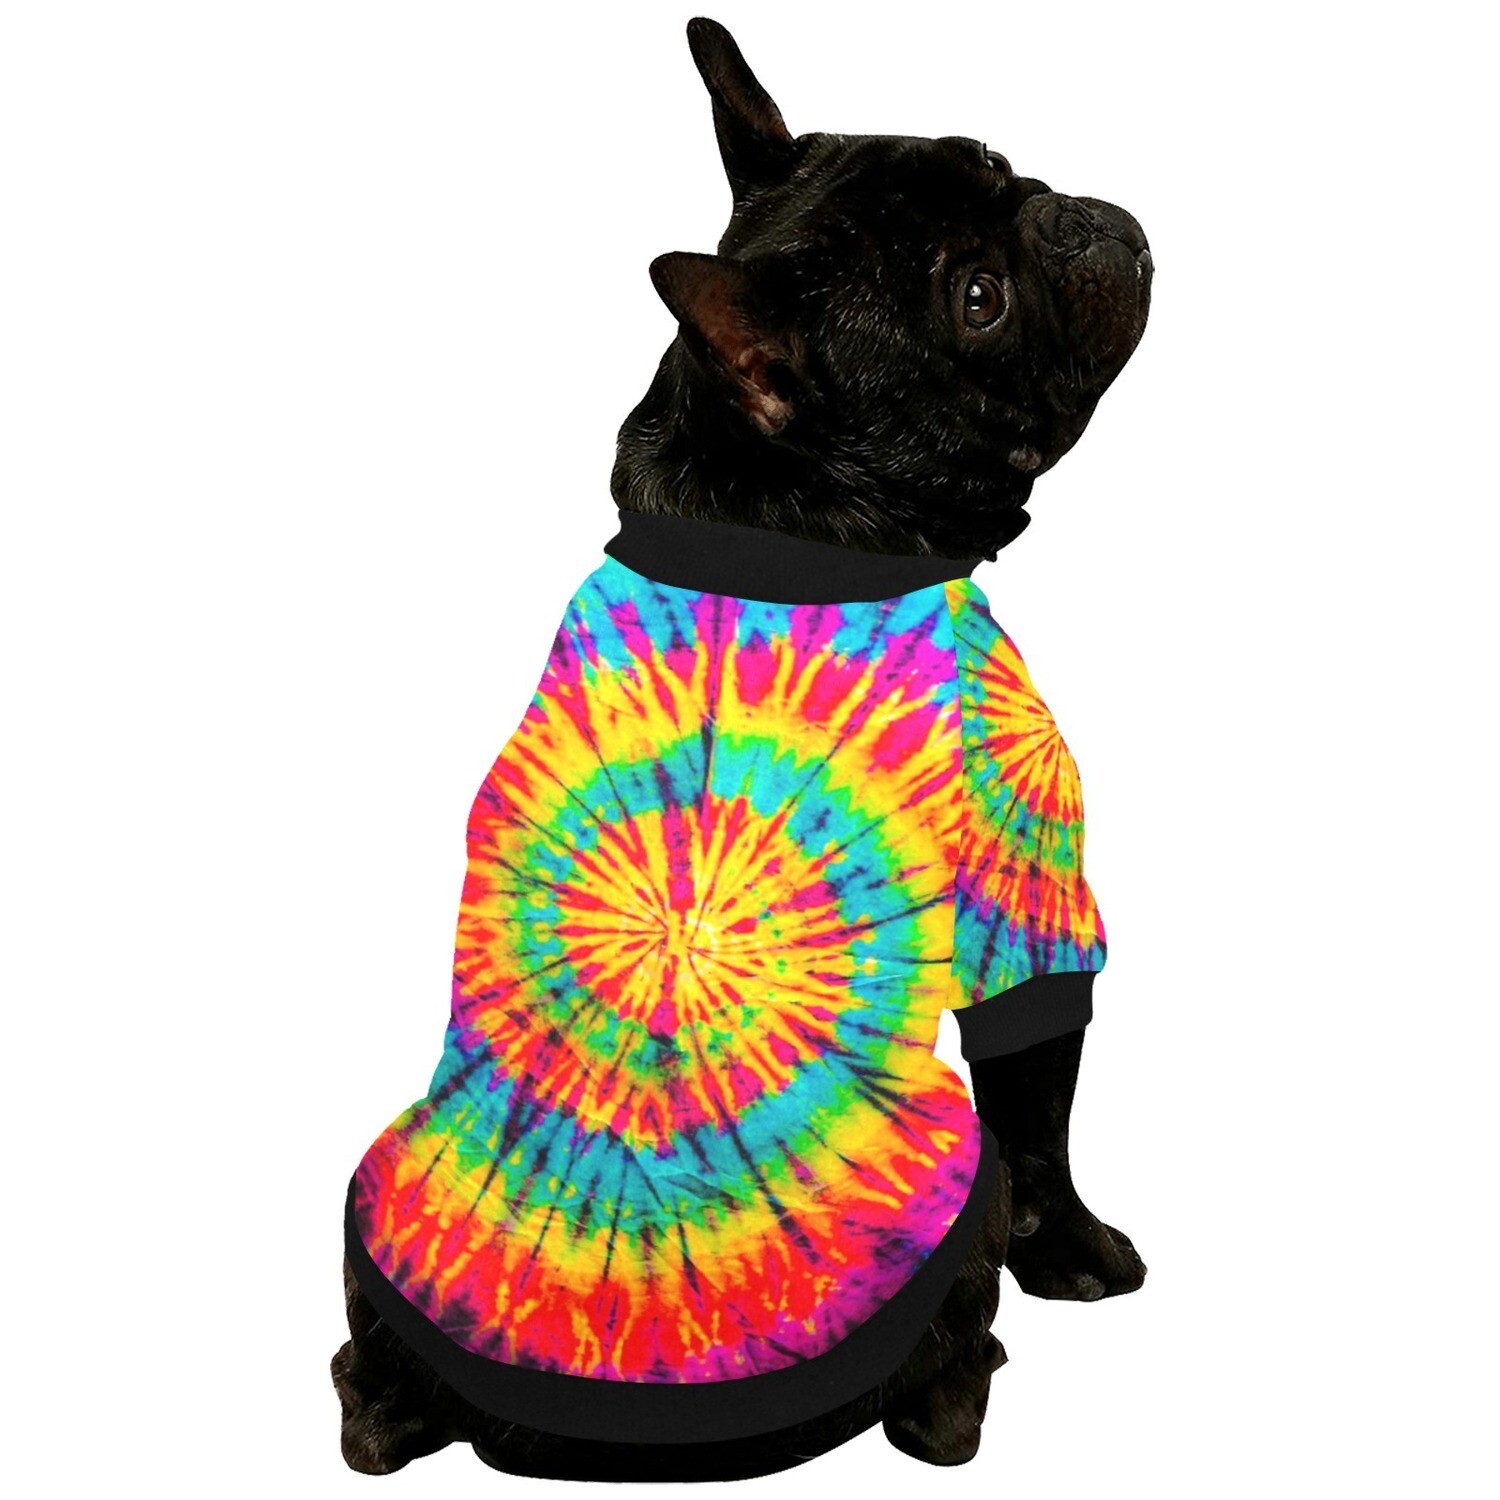 🐕☮︎ Dog Sweatshirt rainbow Tie dye, Hippie, Fuzzy warm buttoned Dog Sweater, Dog clothes, Dog clothing, 6 sizes XS to 2XL, Gift for dogs